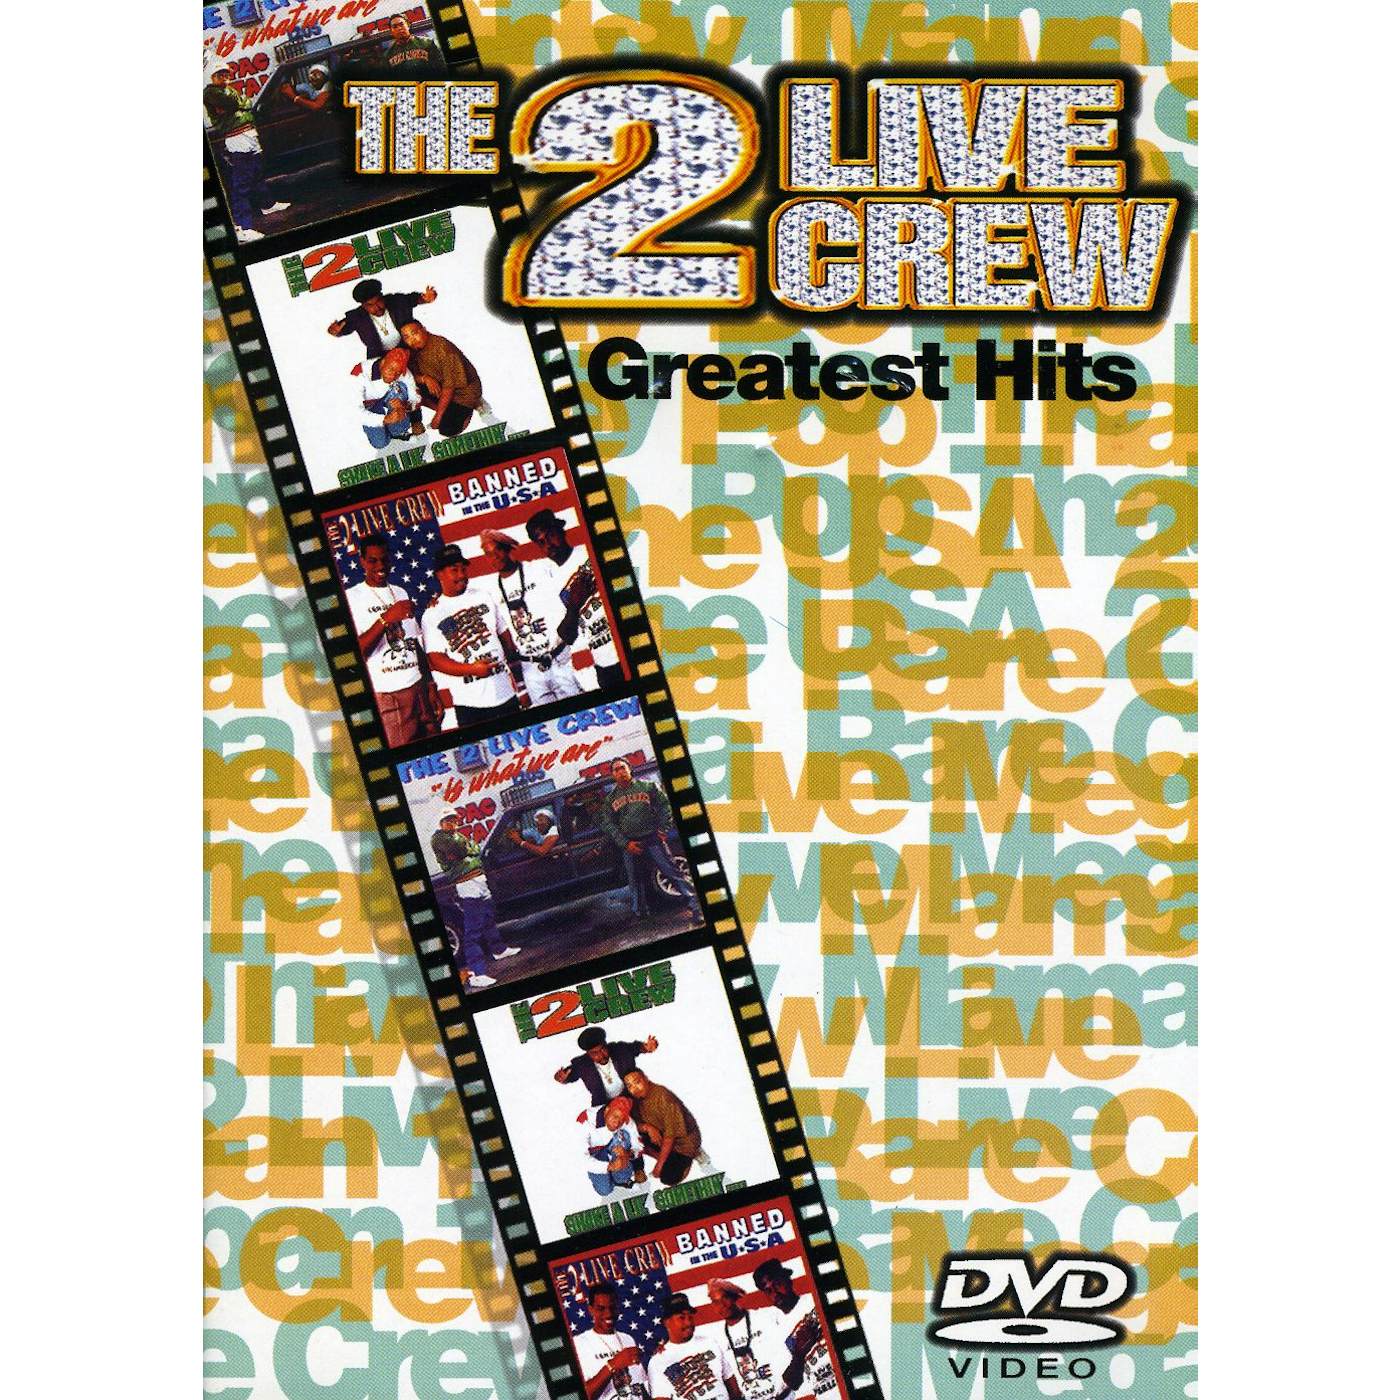 2 LIVE CREW GREATEST HITS DVD